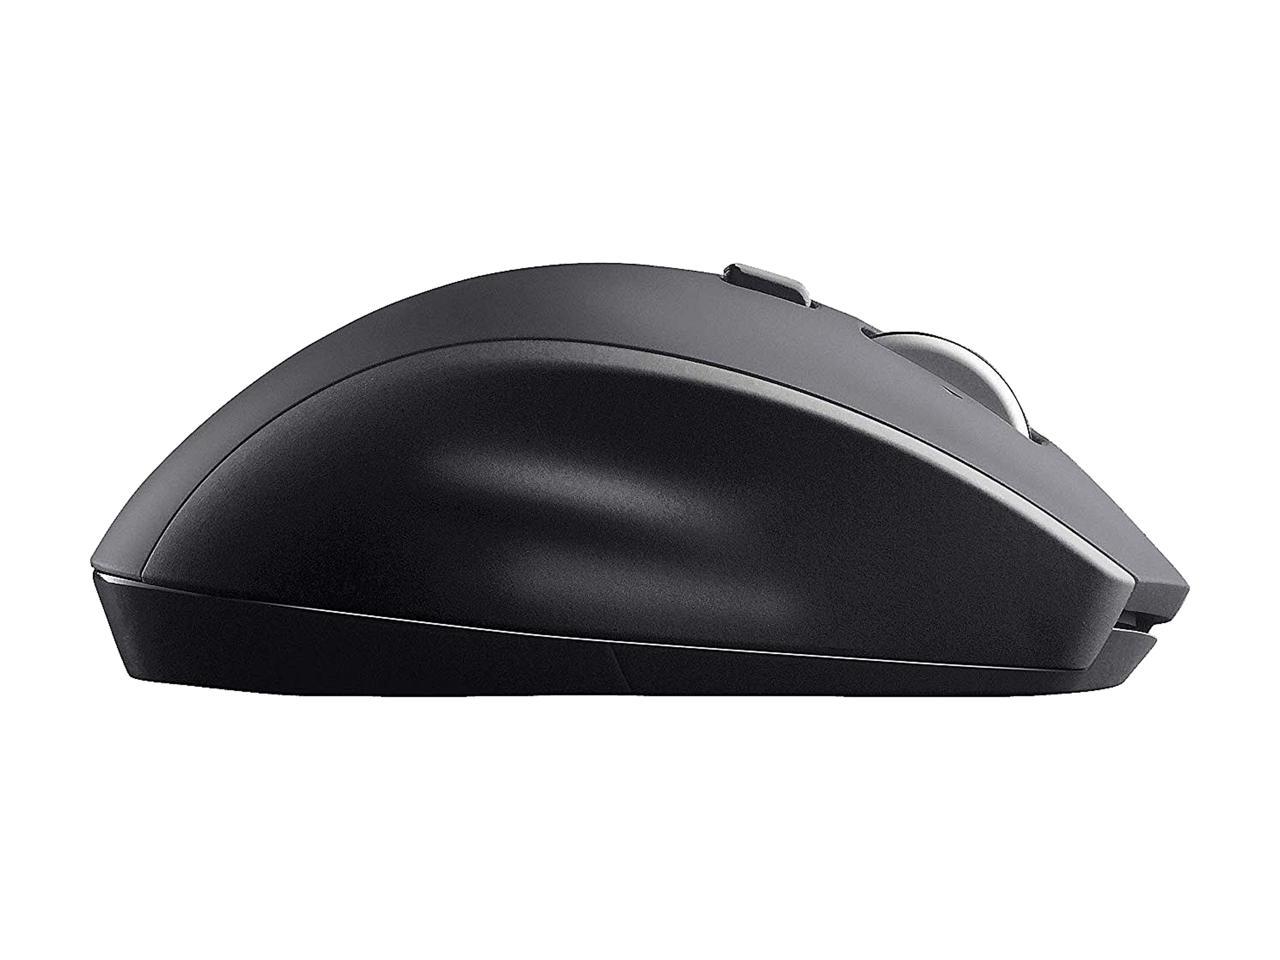 Logitech M705 Marathon Wireless Mouse (910-001935)